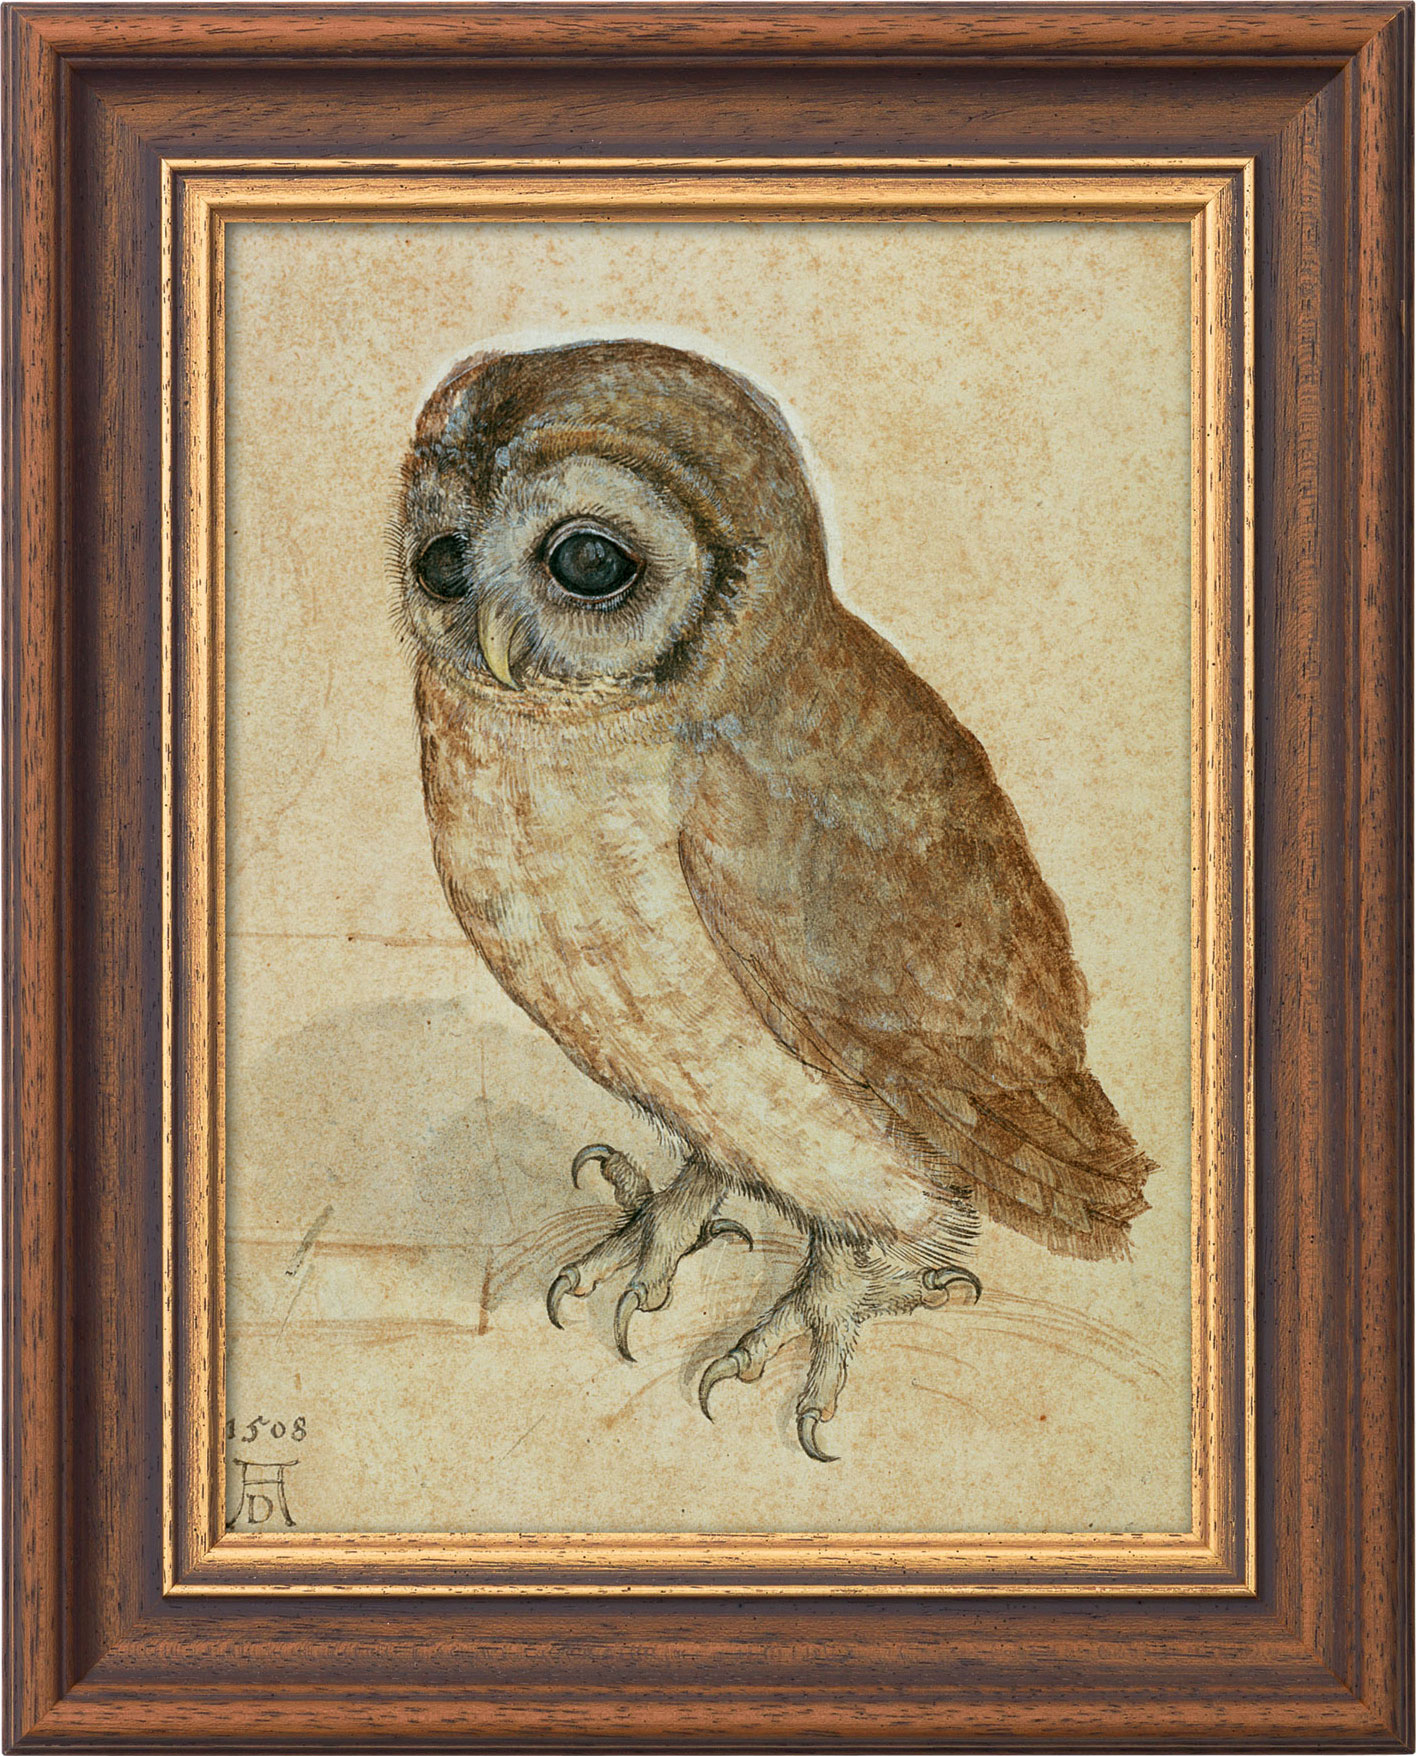 Picture "Tawny Owl" (1508), framed by Albrecht Dürer